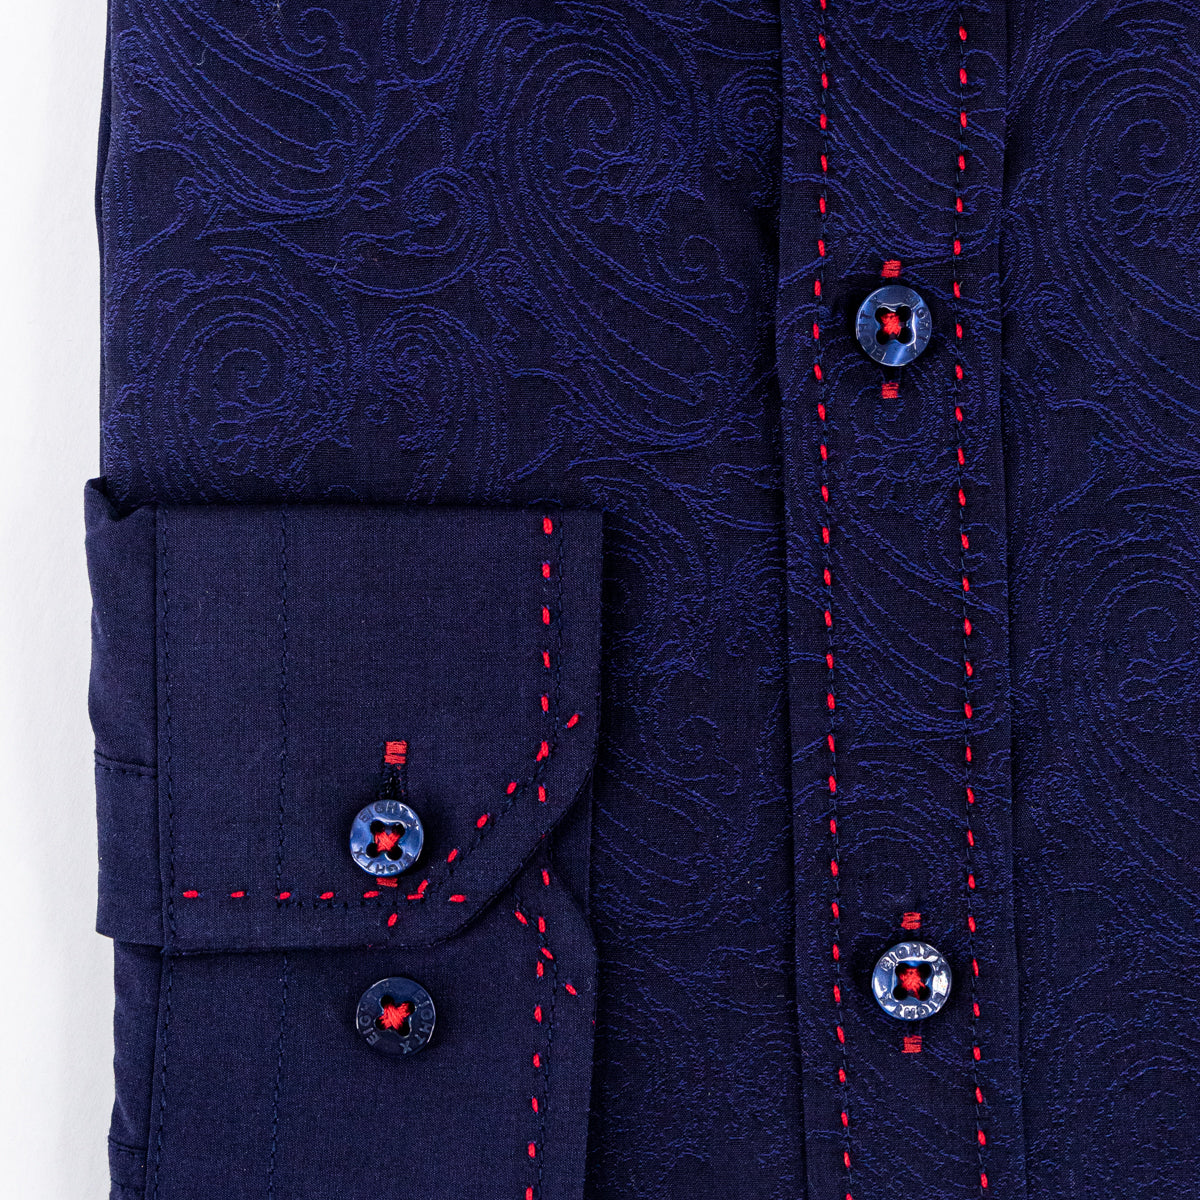 Eight x Denim Floral Jacquard Button Down Shirt Navy / M